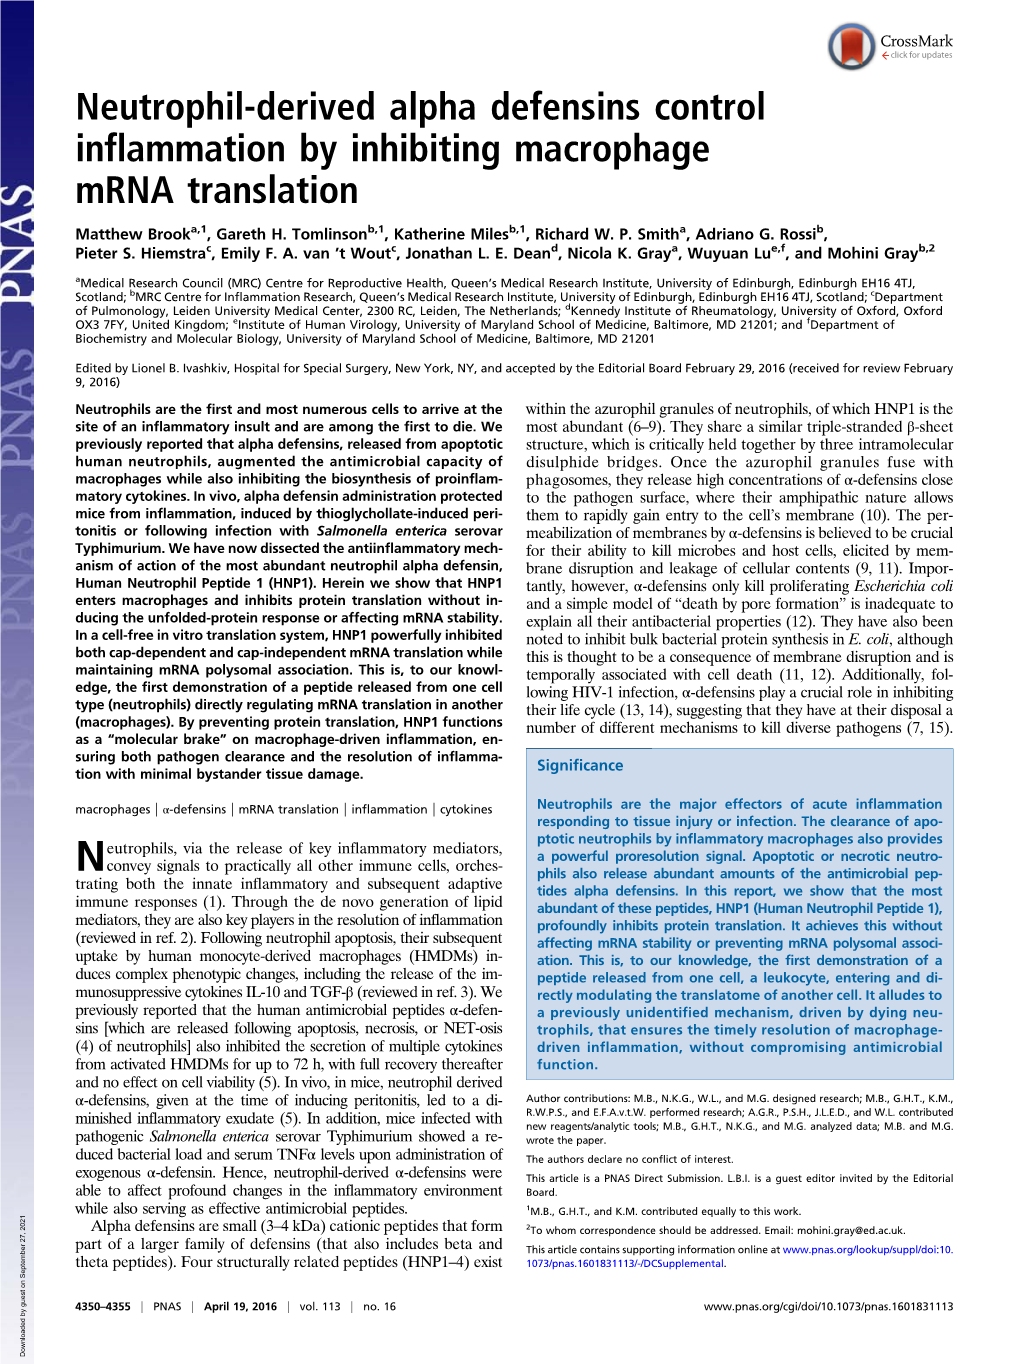 Neutrophil-Derived Alpha Defensins Control Inflammation by Inhibiting Macrophage Mrna Translation